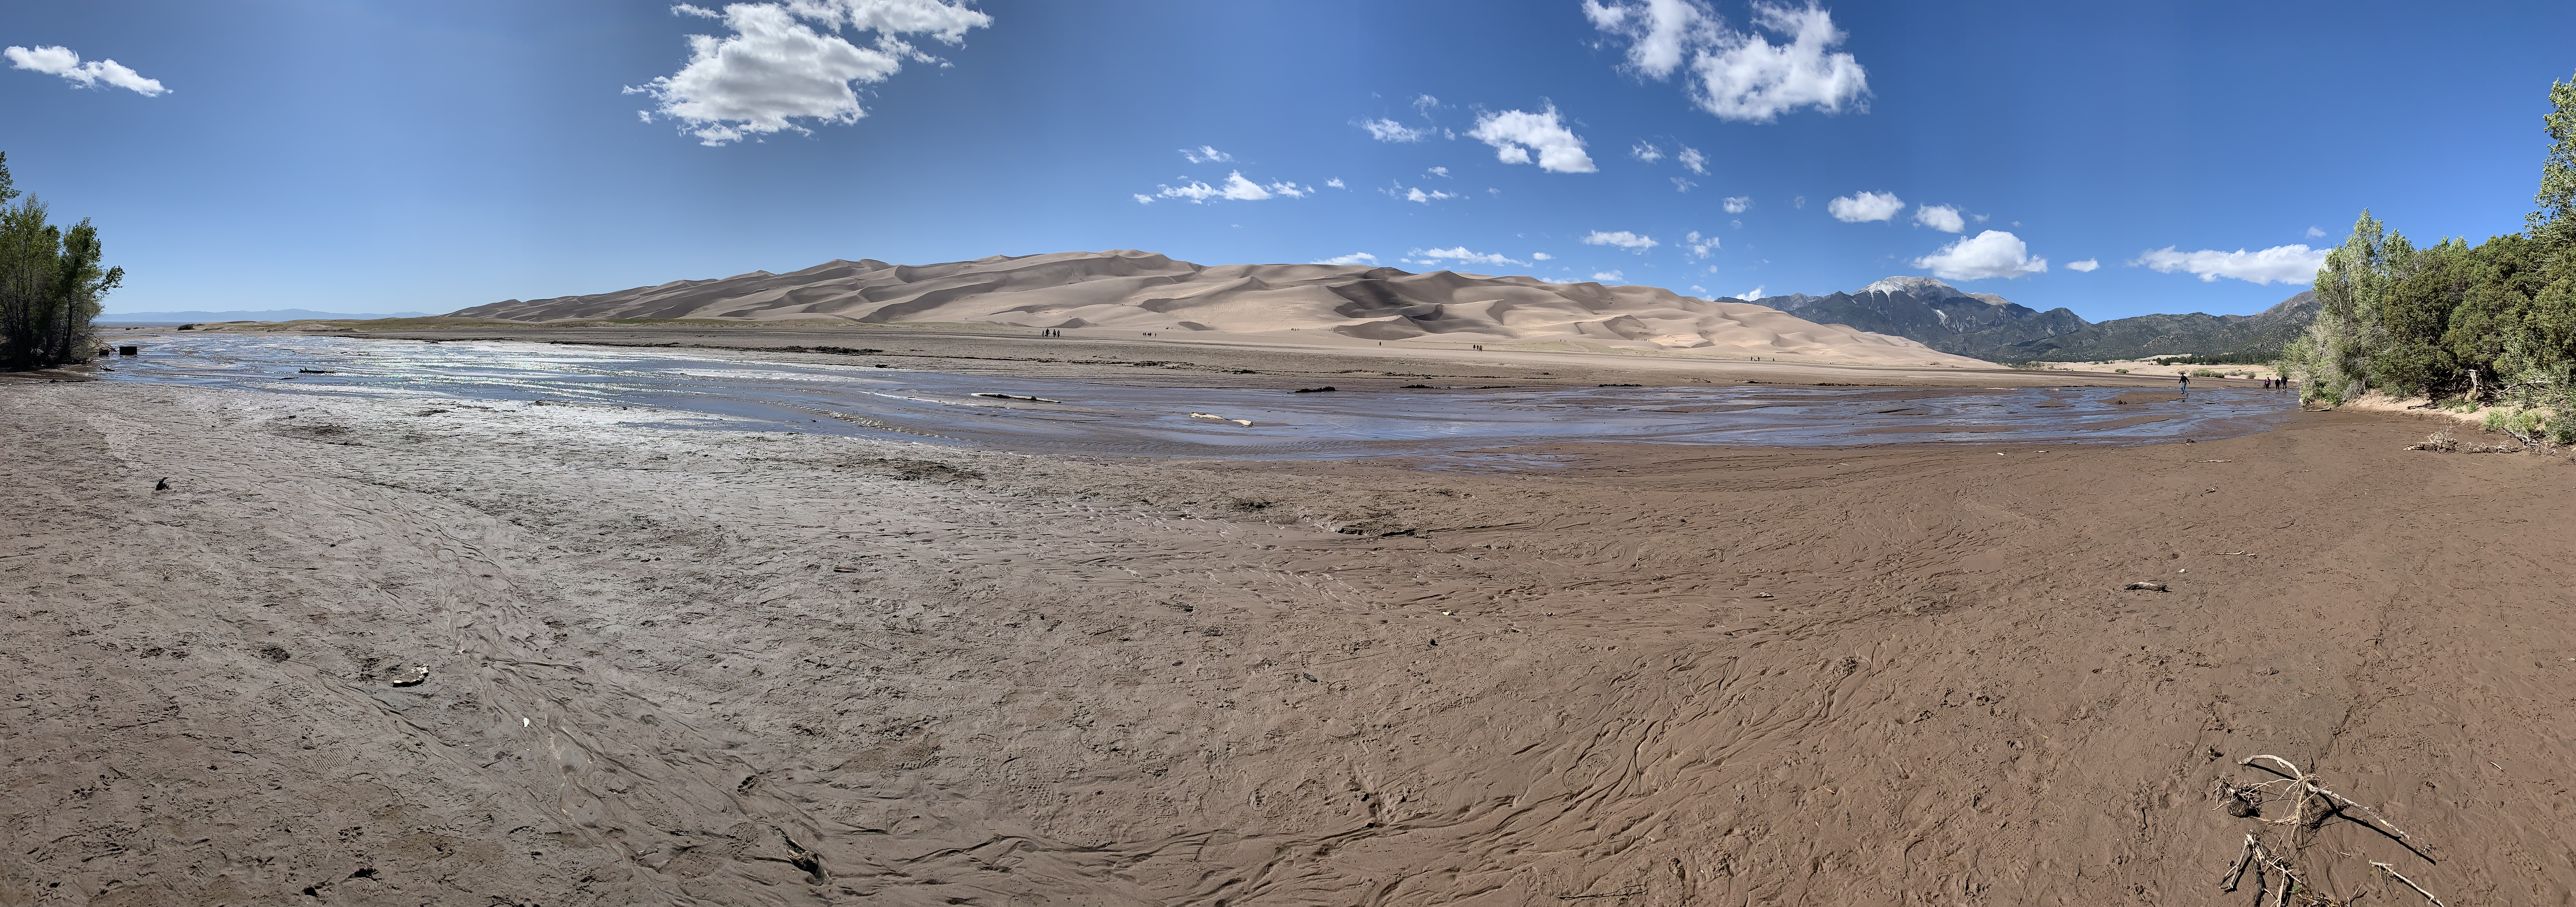 Great Sand Dunes National Park – Summer 2020